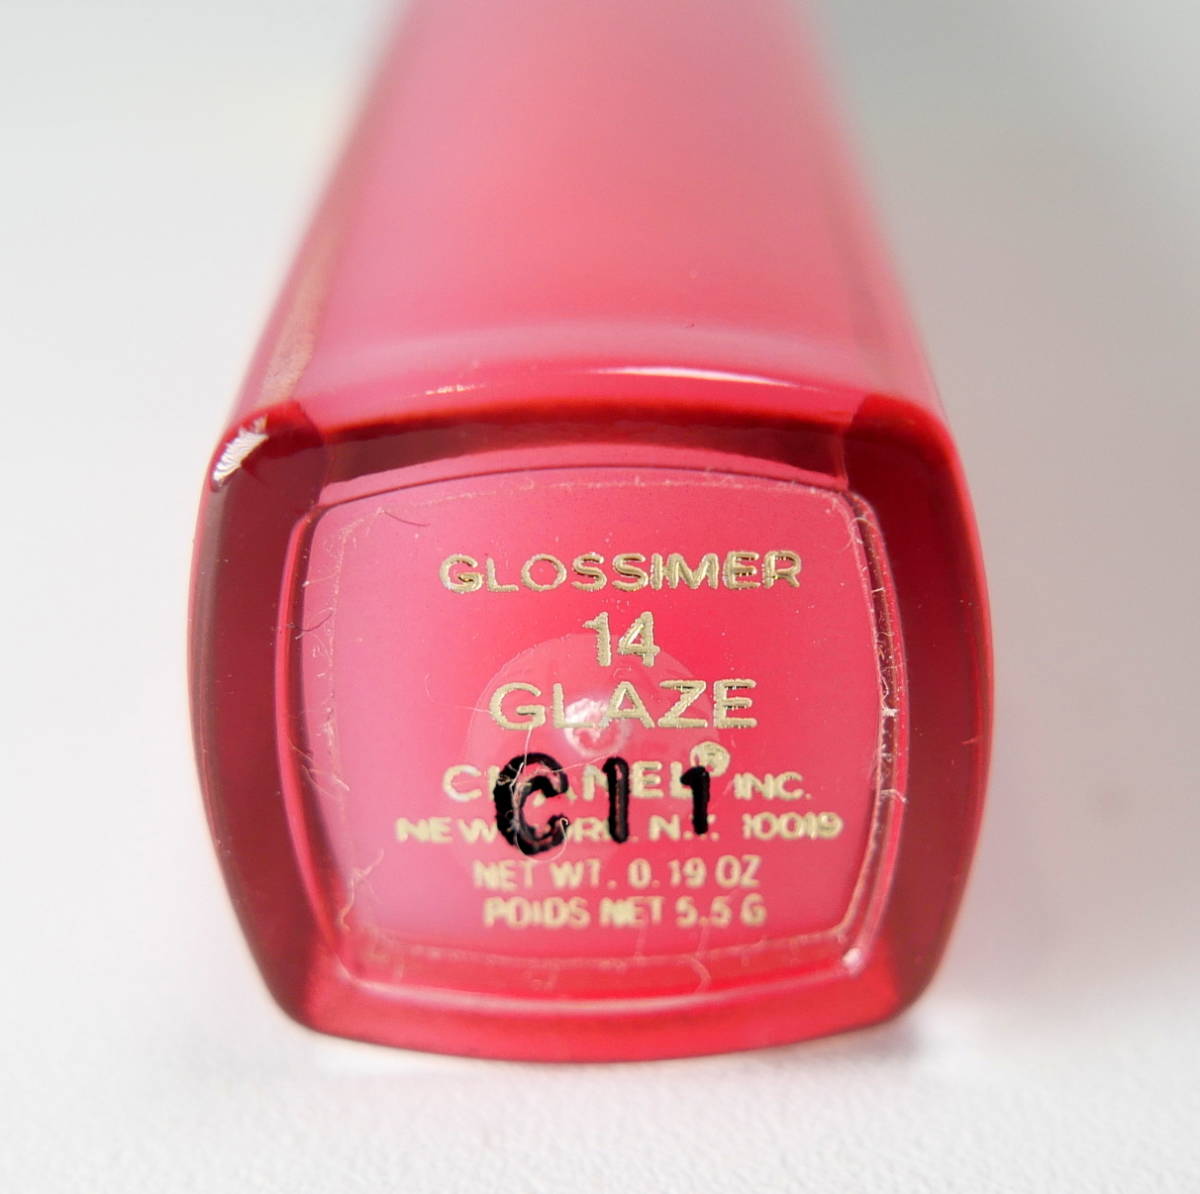 *CHNEL Chanel CLOSSIMER 14 GLAZE lip gloss 